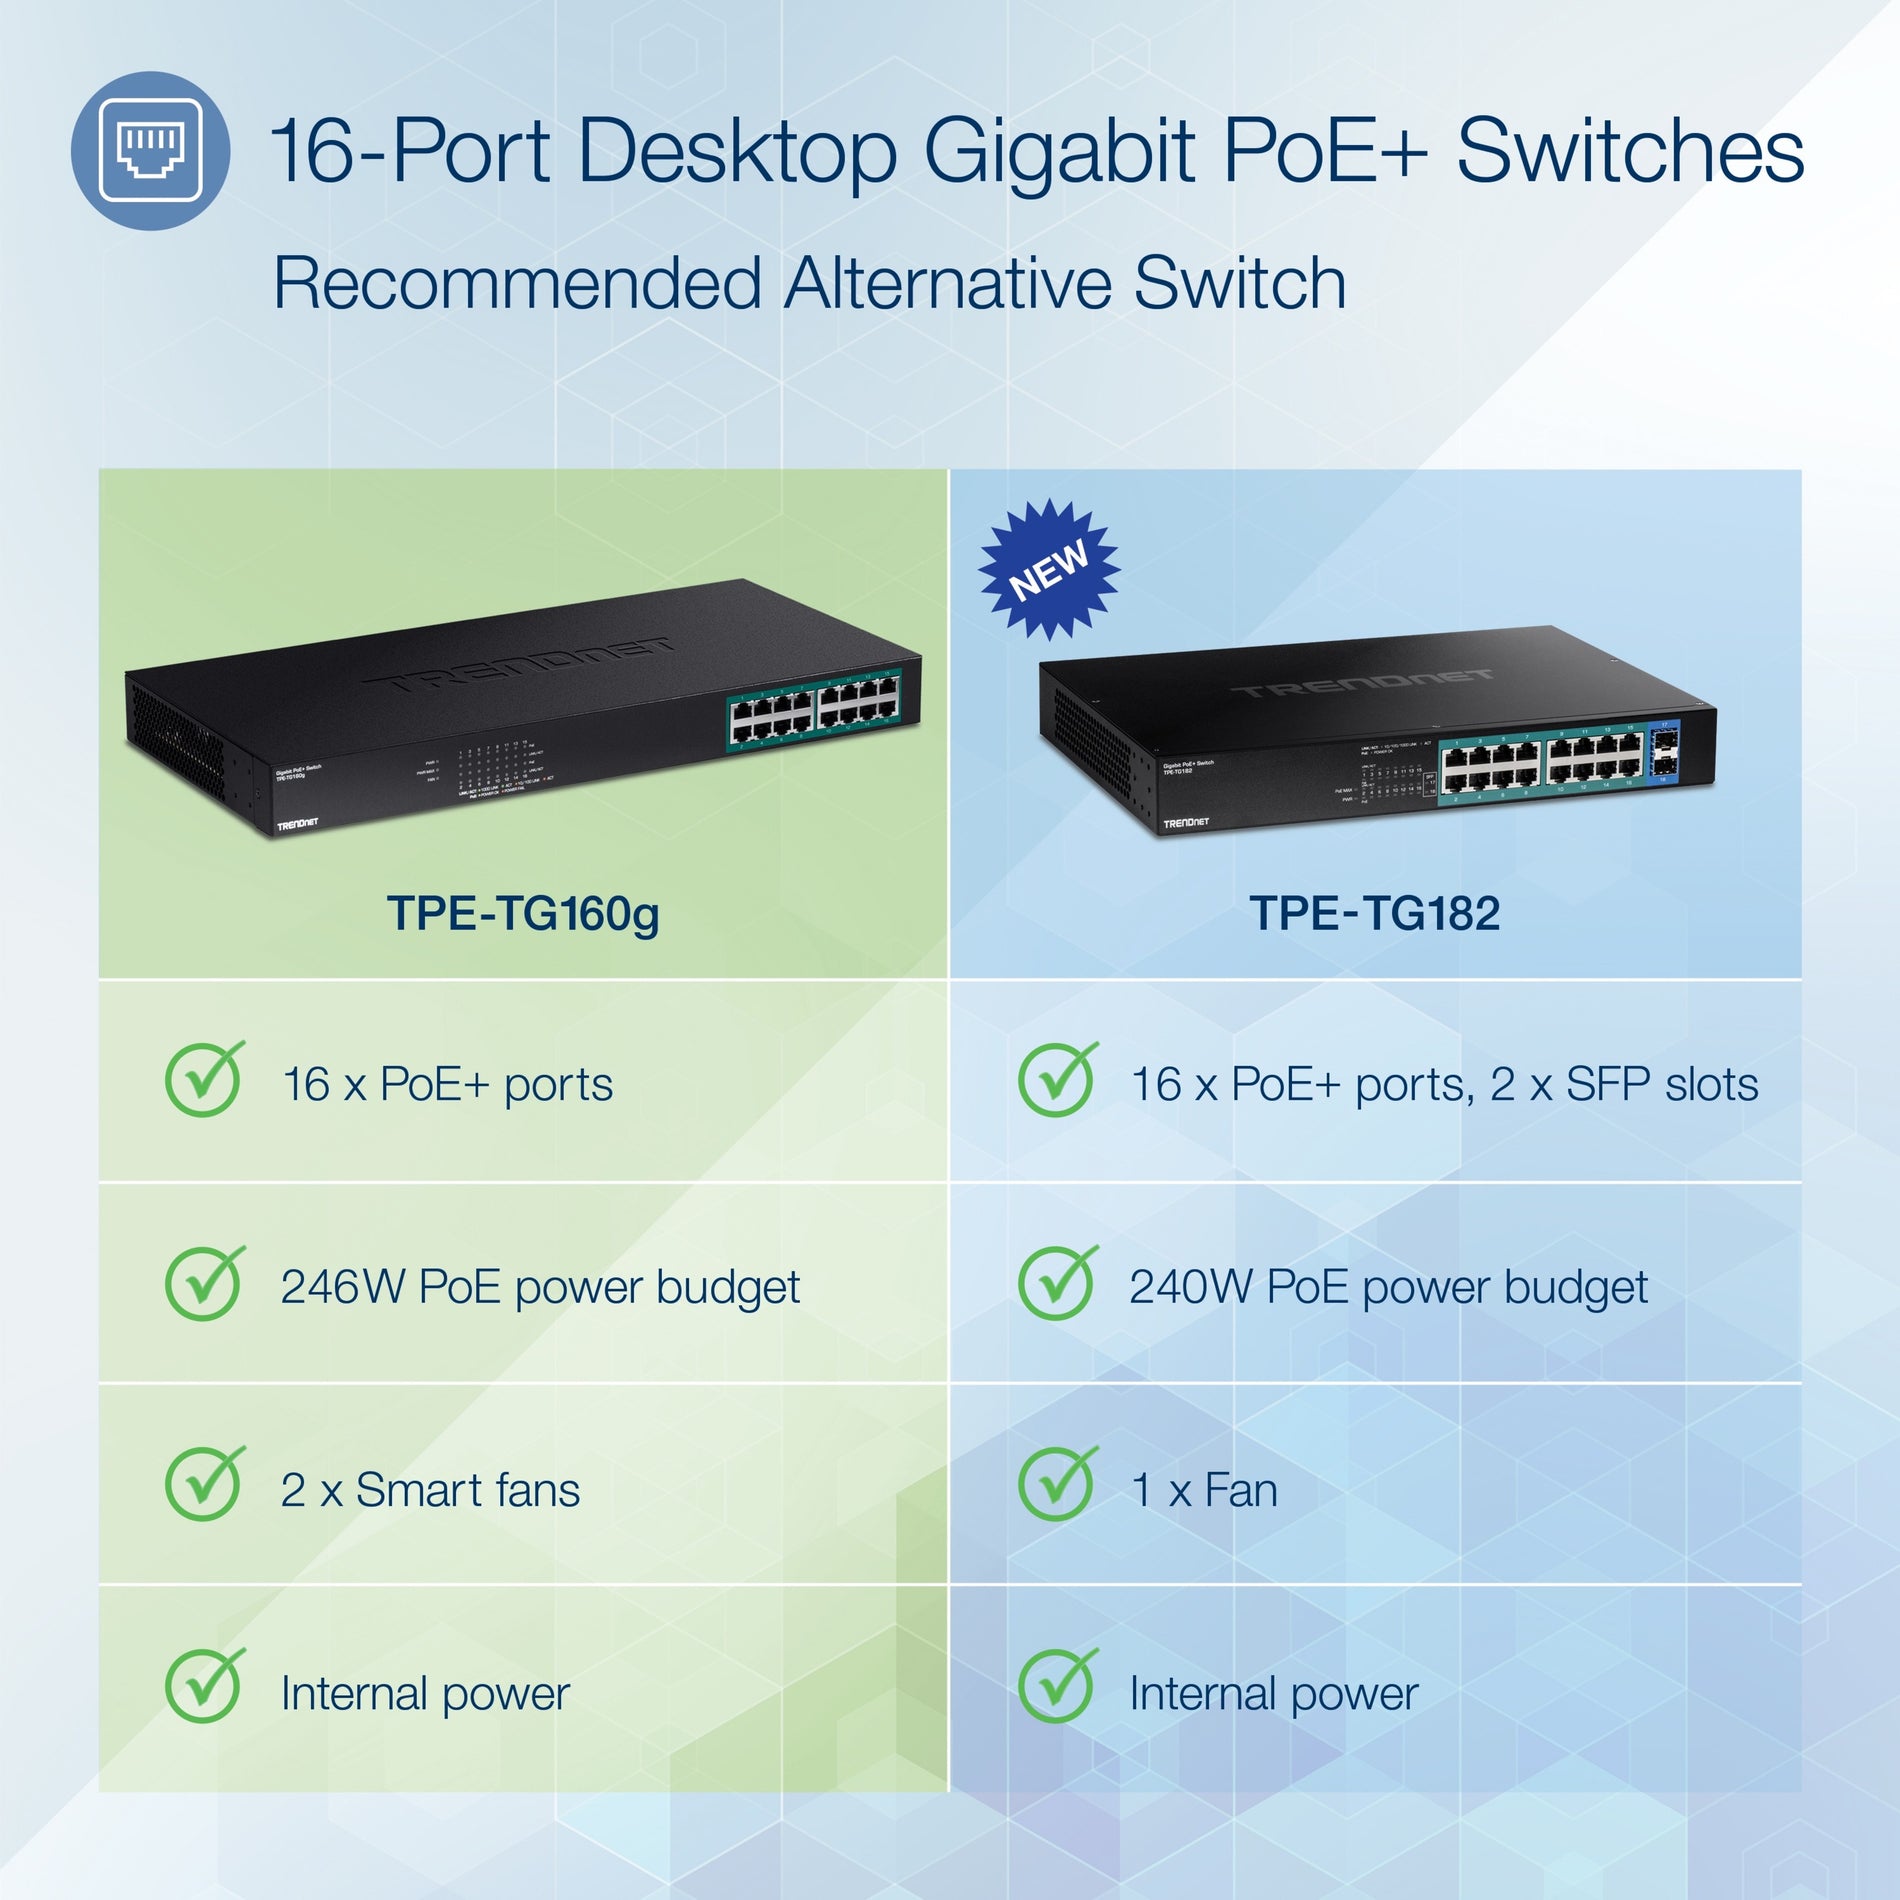 TRENDnet TPE-TG160G 16-port GREENnet Gigabit PoE+ Switch (250W), 16 x Gigabit PoE+ Ports, 32 Gbps Switching Capacity, Metal, Lifetime Protection